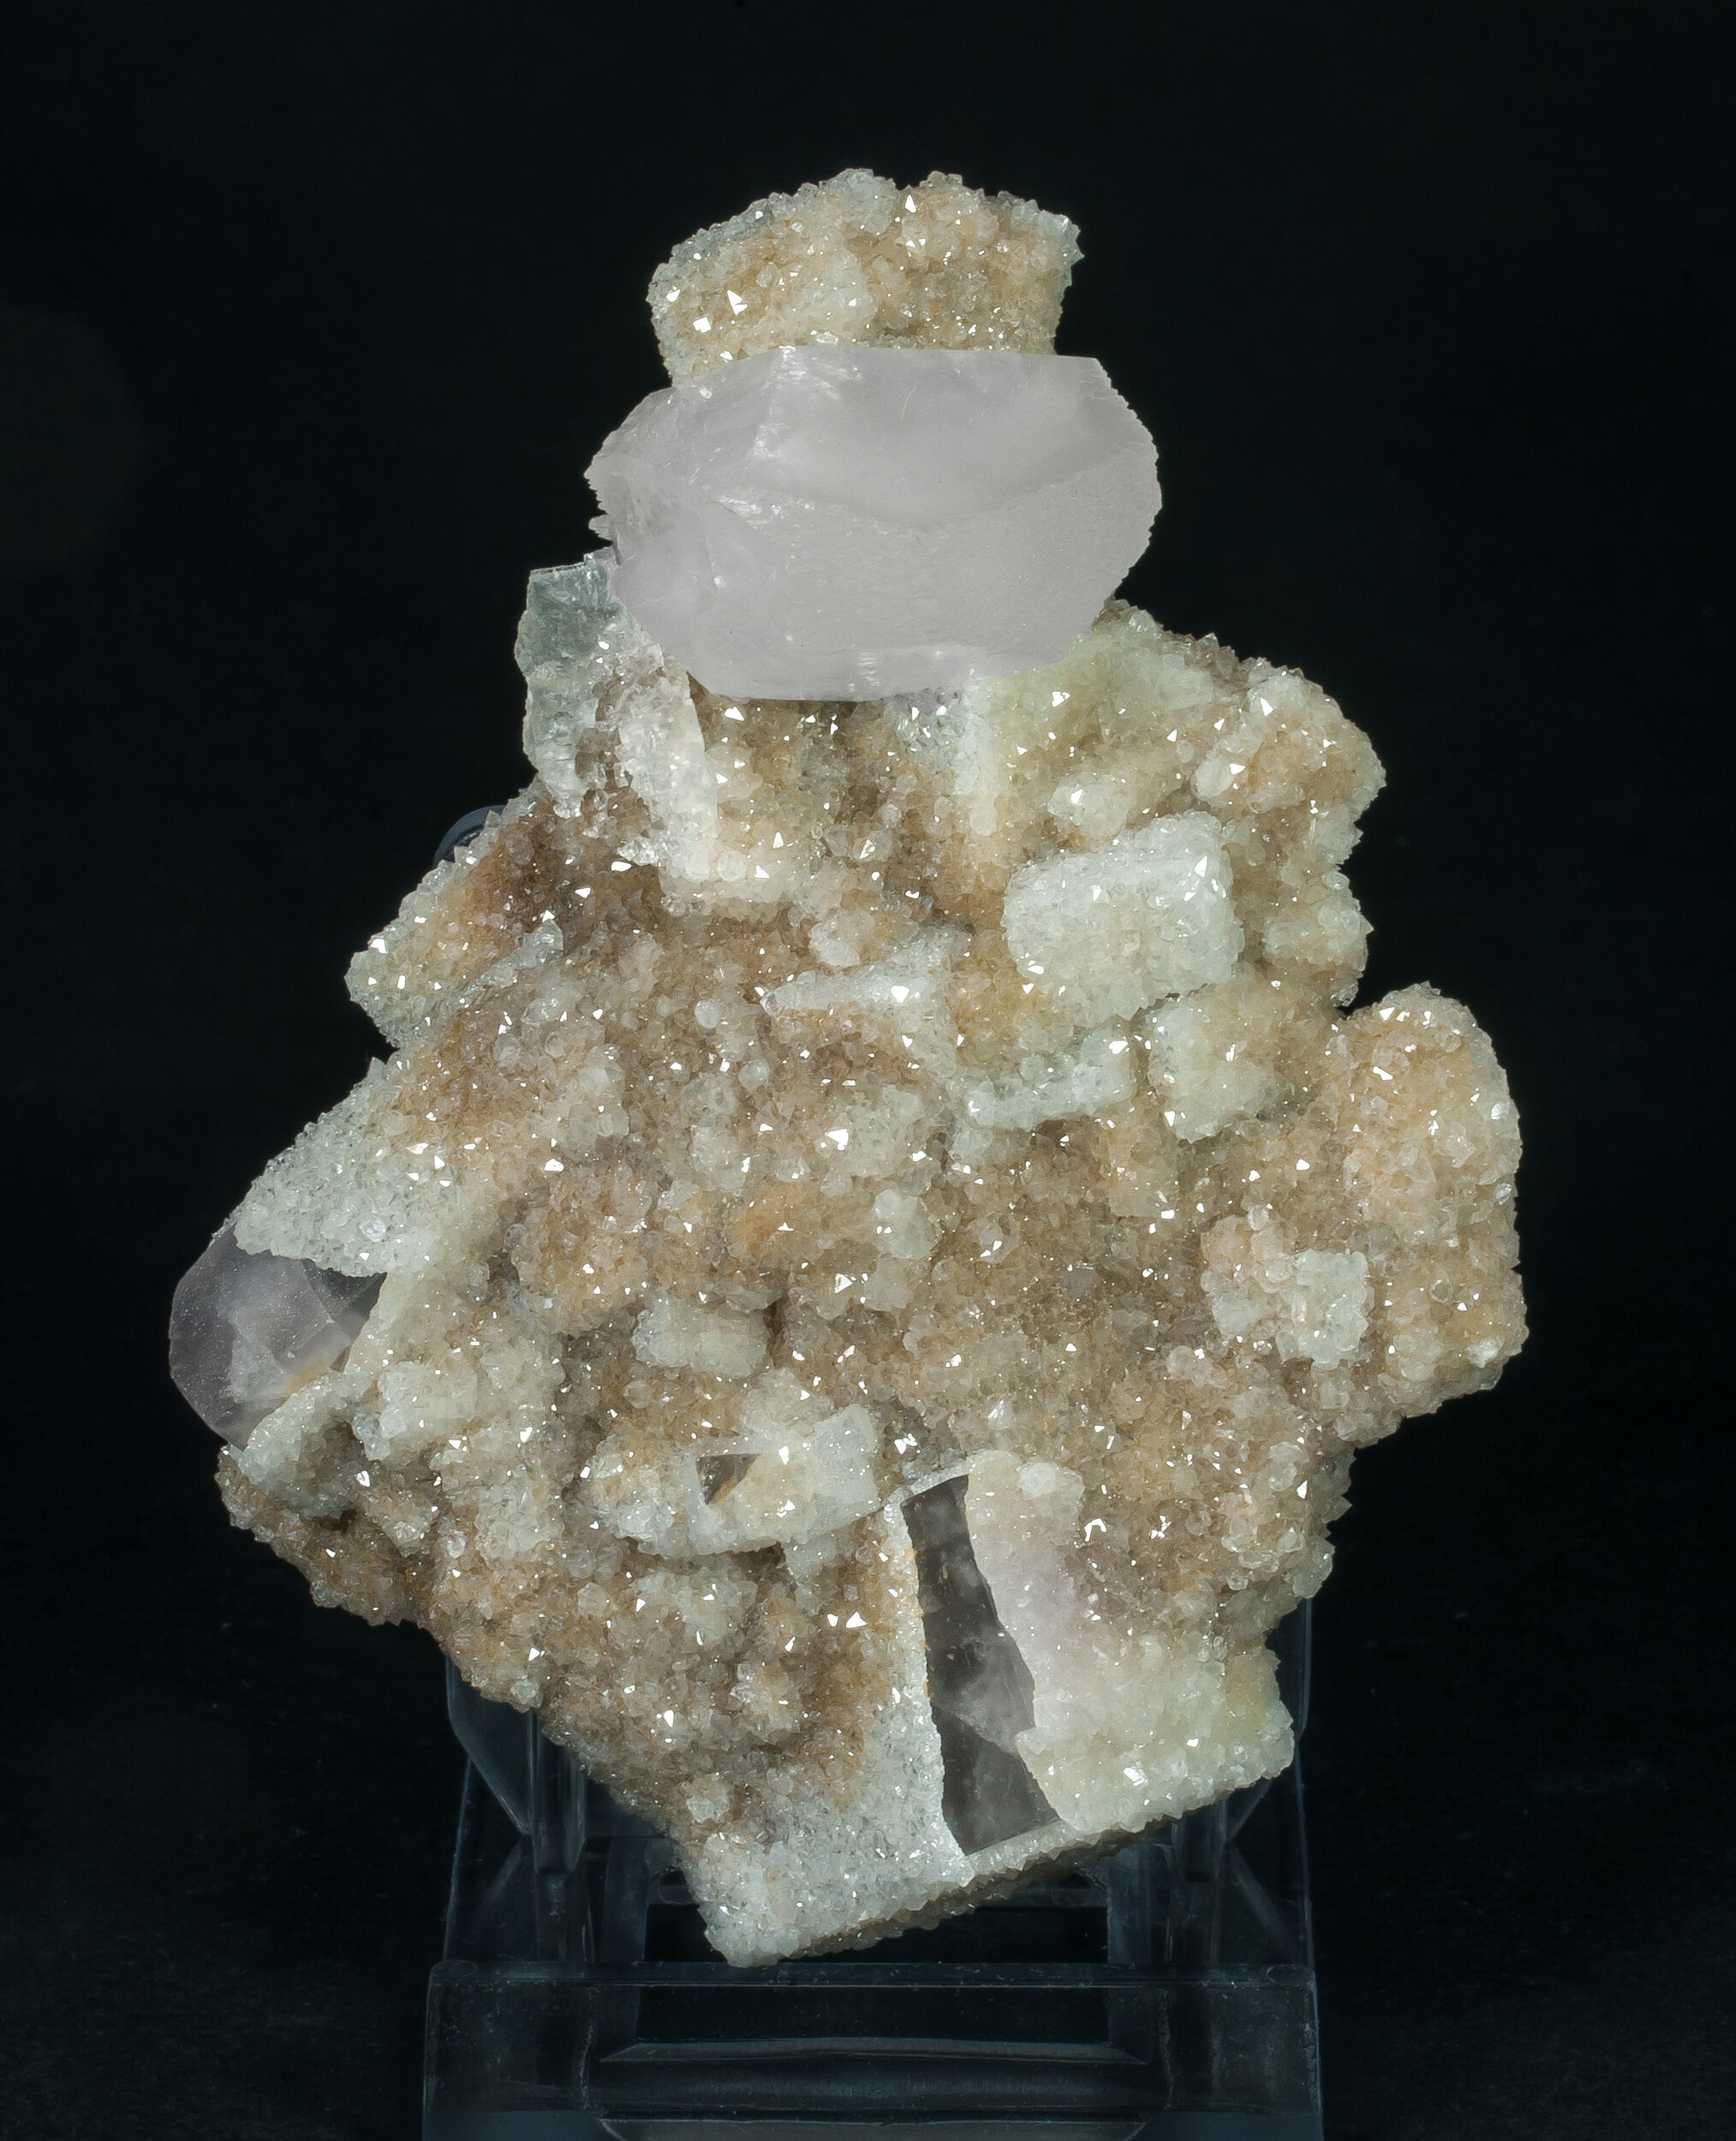 specimens/s_imagesAO2/Fluorite-MHR99AO2r.jpg